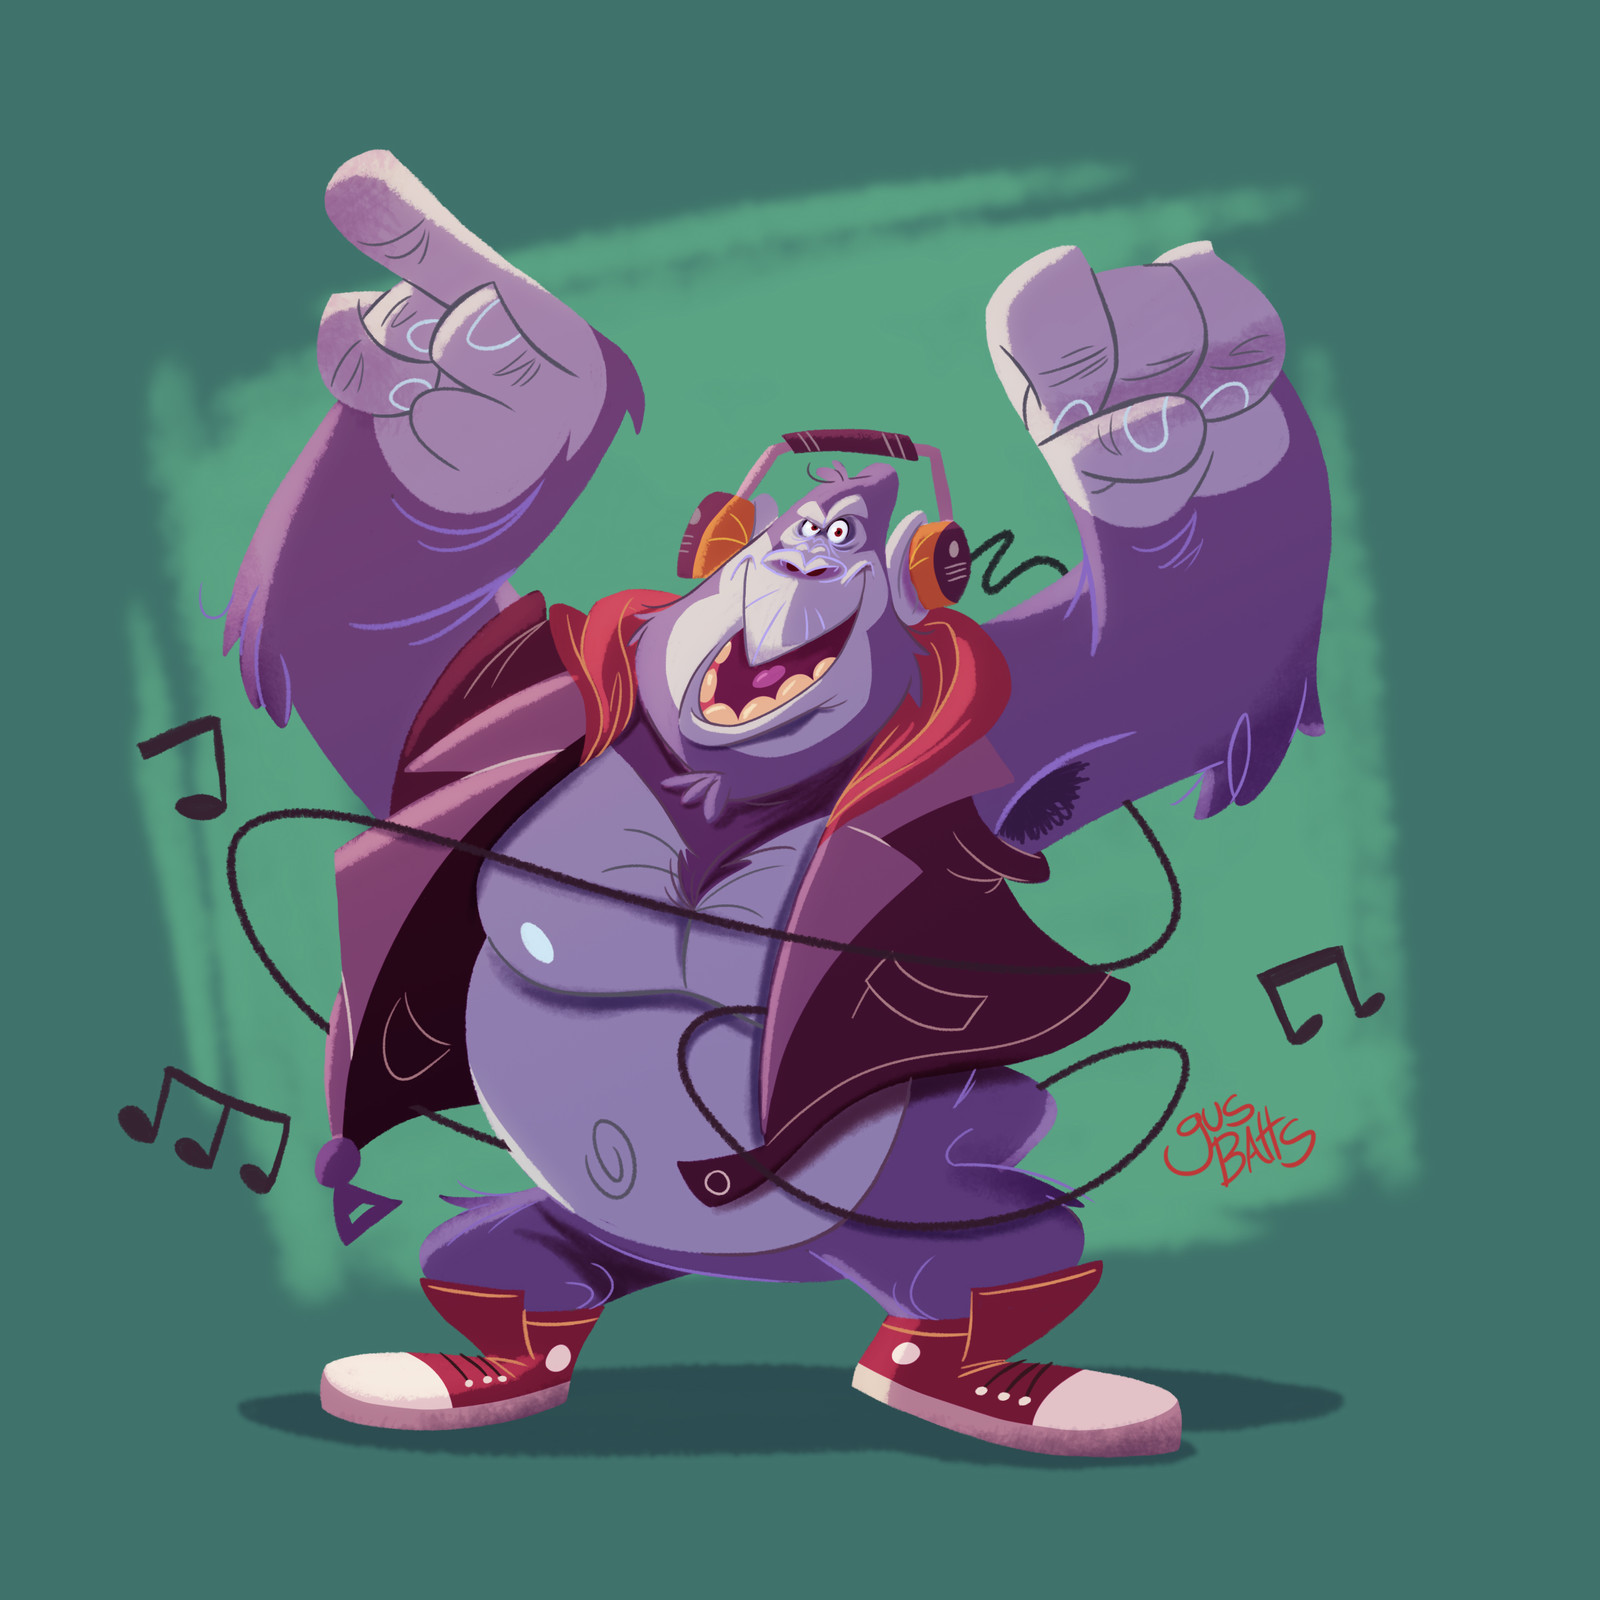 Dancing gorila character design